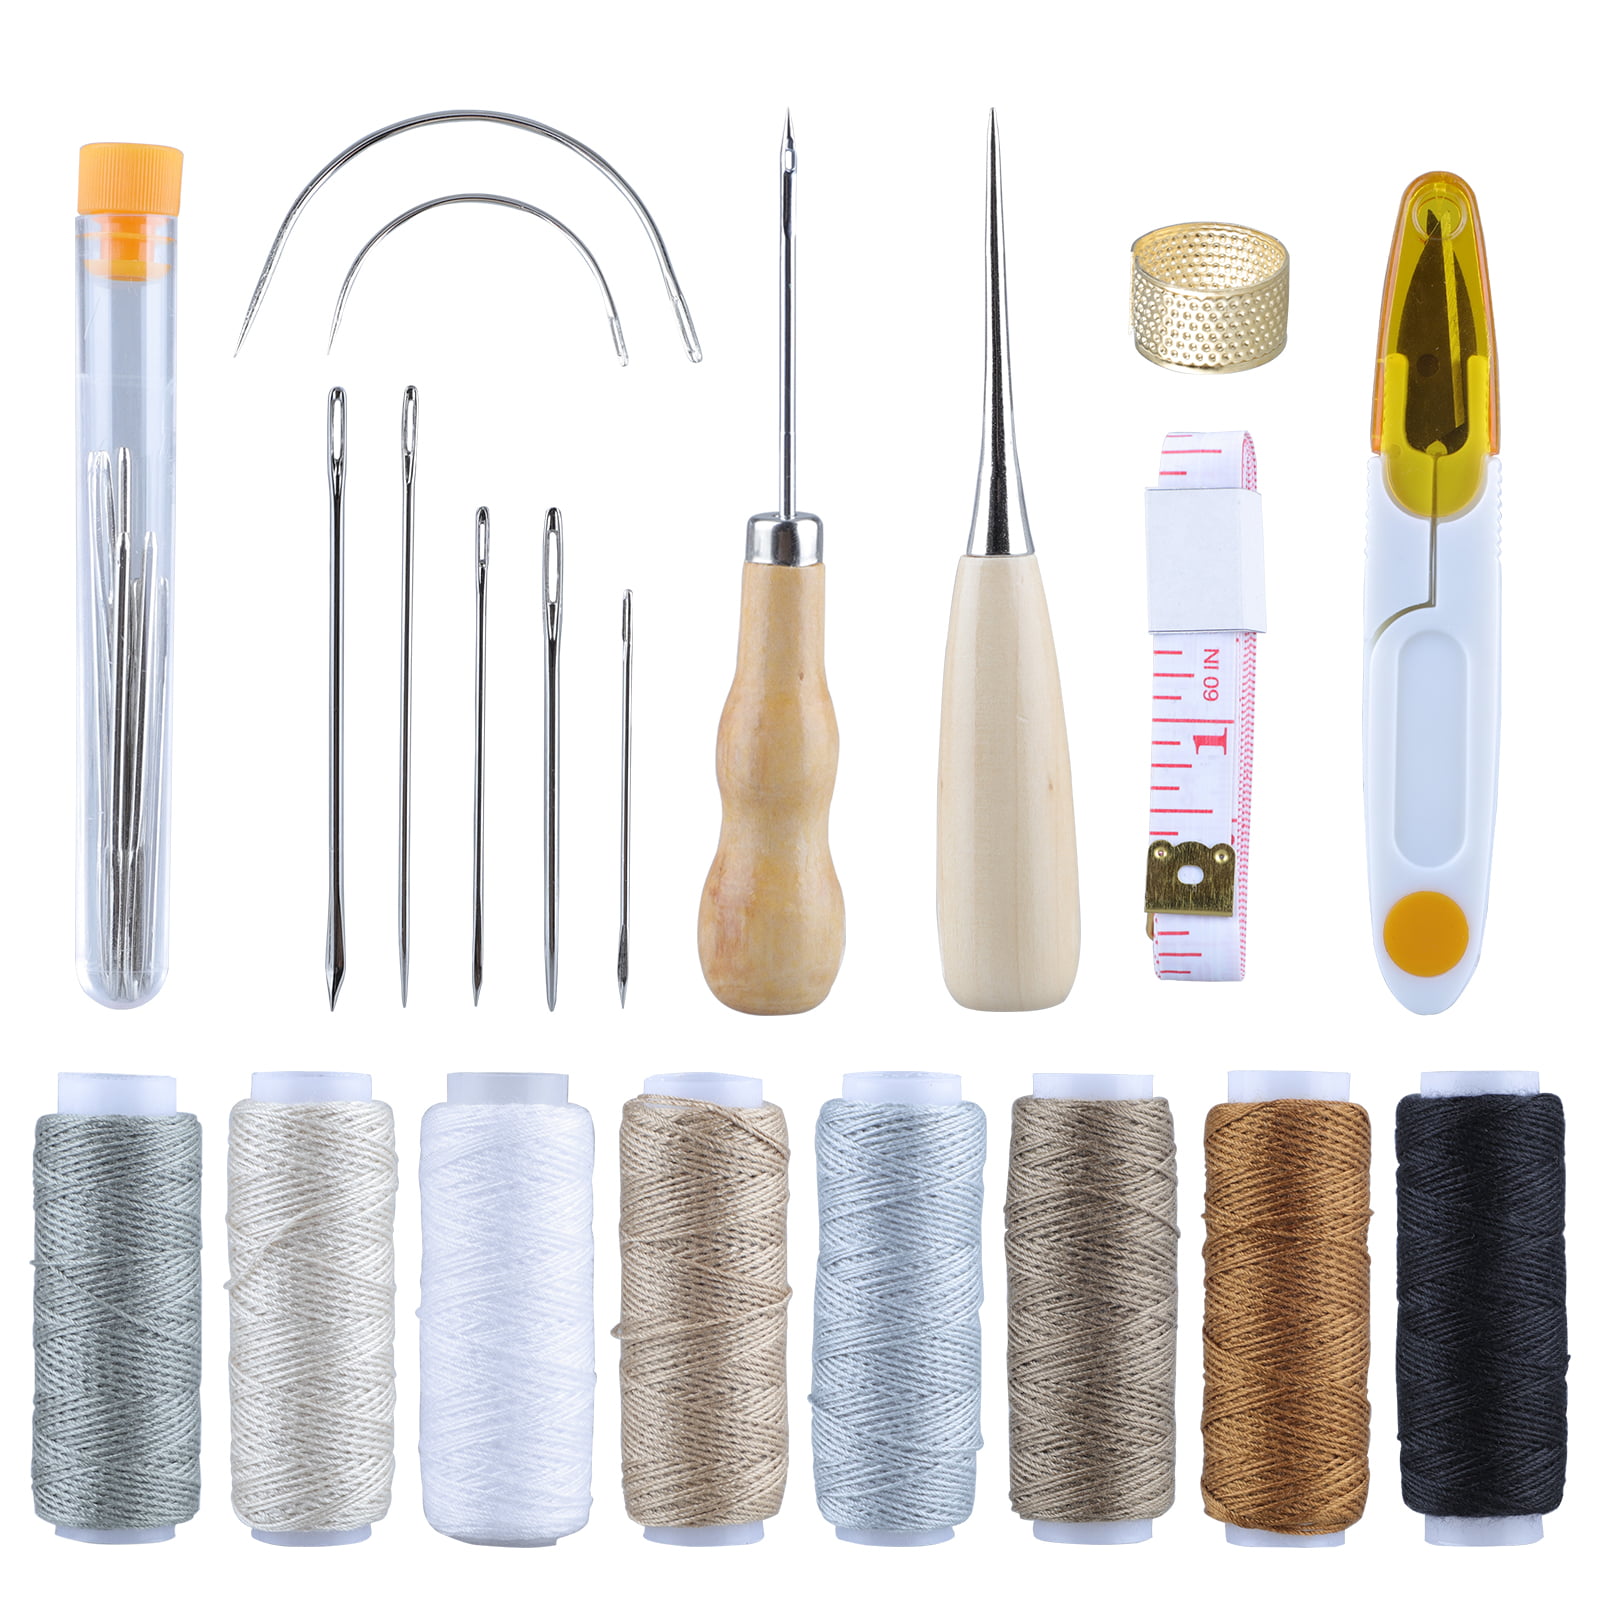 20pcs Leather Craft Tools Kit Stitching Sewing Thread Needles Awl DIY Repair Set